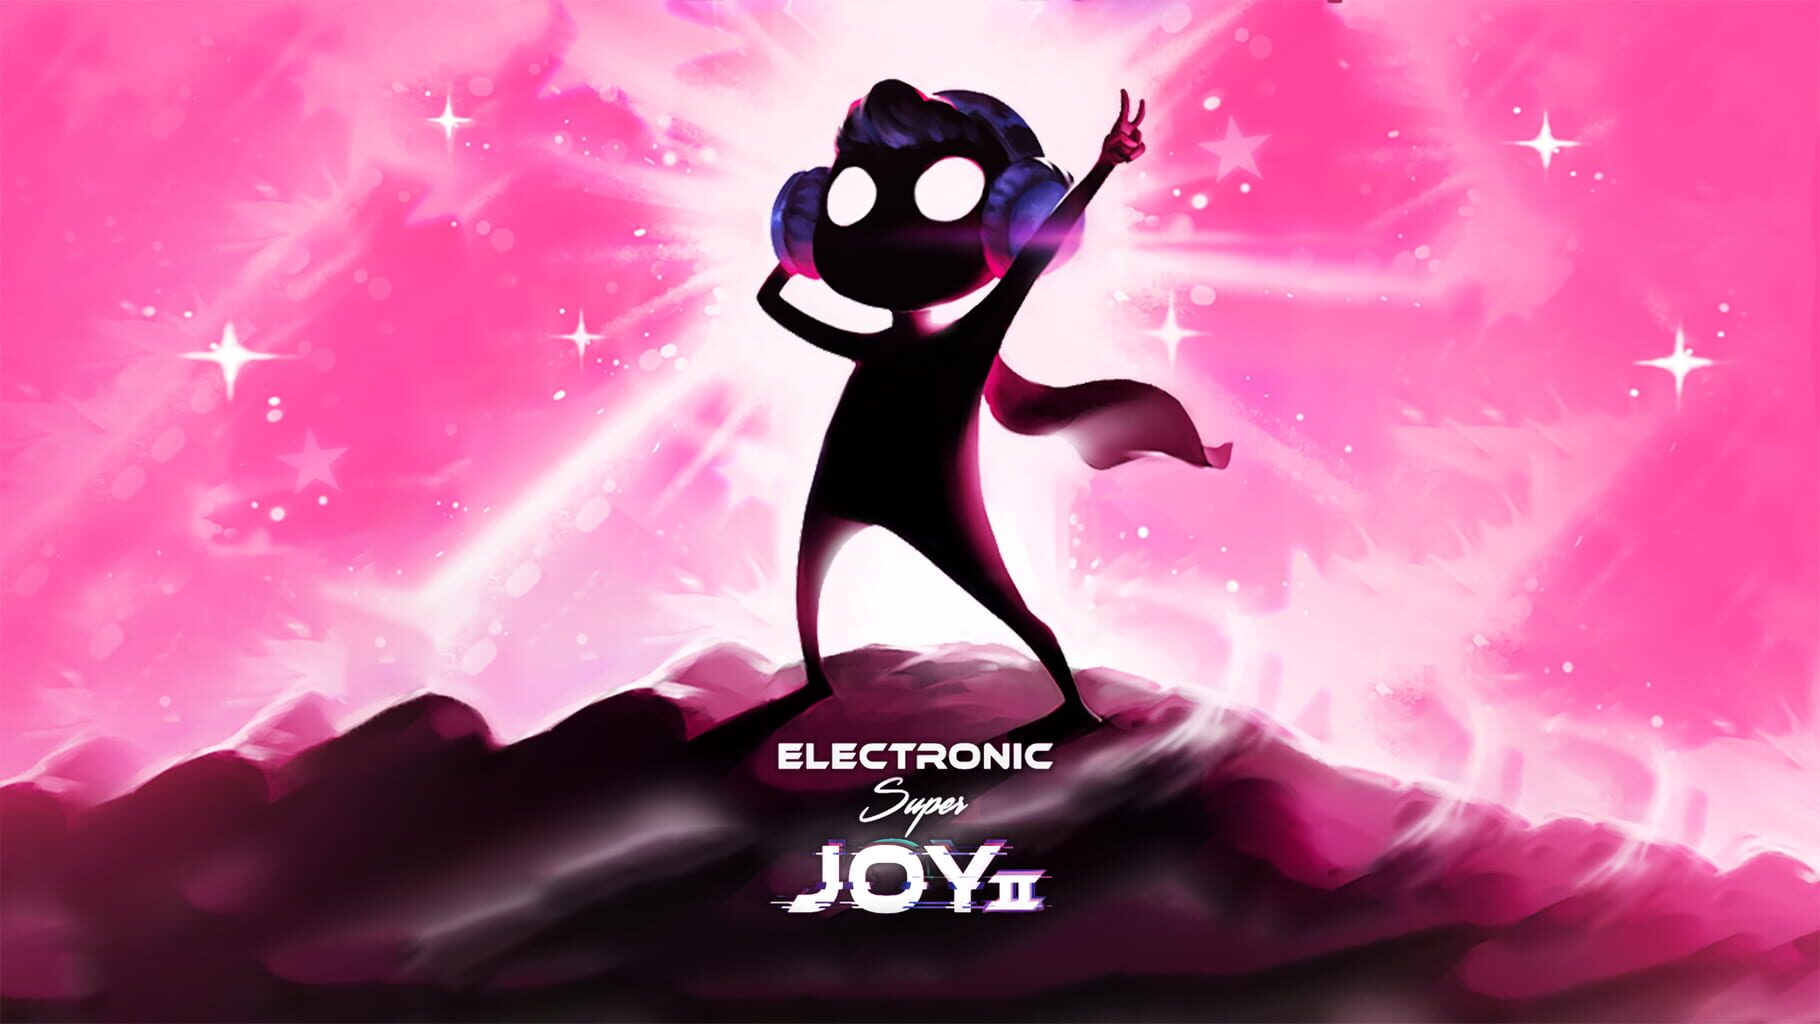 Electronic Super Joy 2 artwork